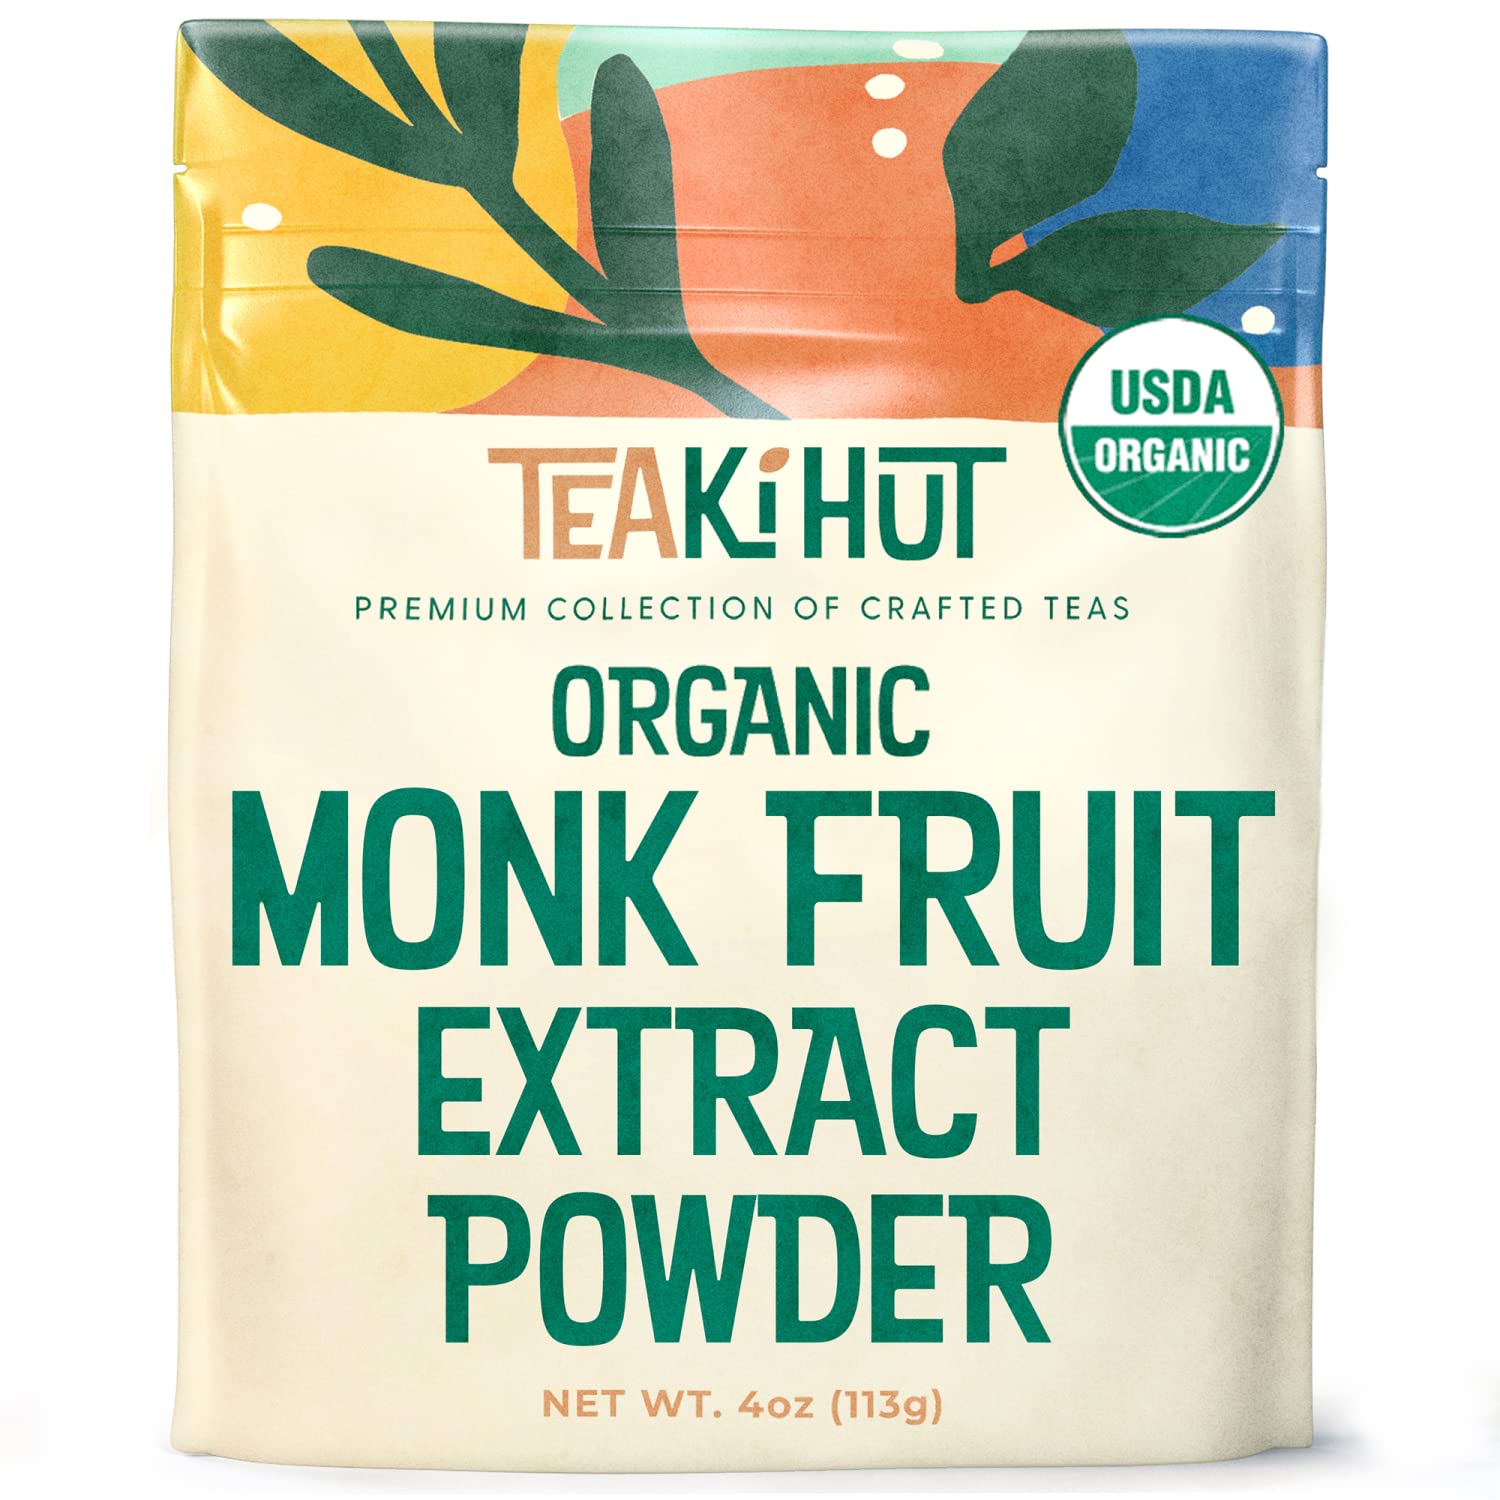 TEAki Hut Organic Monk Fruit Sweetener, 4oz (113g) 365 Servings, No Fillers Pure USDA Organic Monk Fruit Extract with No Aftertaste, Zero Calorie & Zero Carbs, Keto & Paleo Friendly